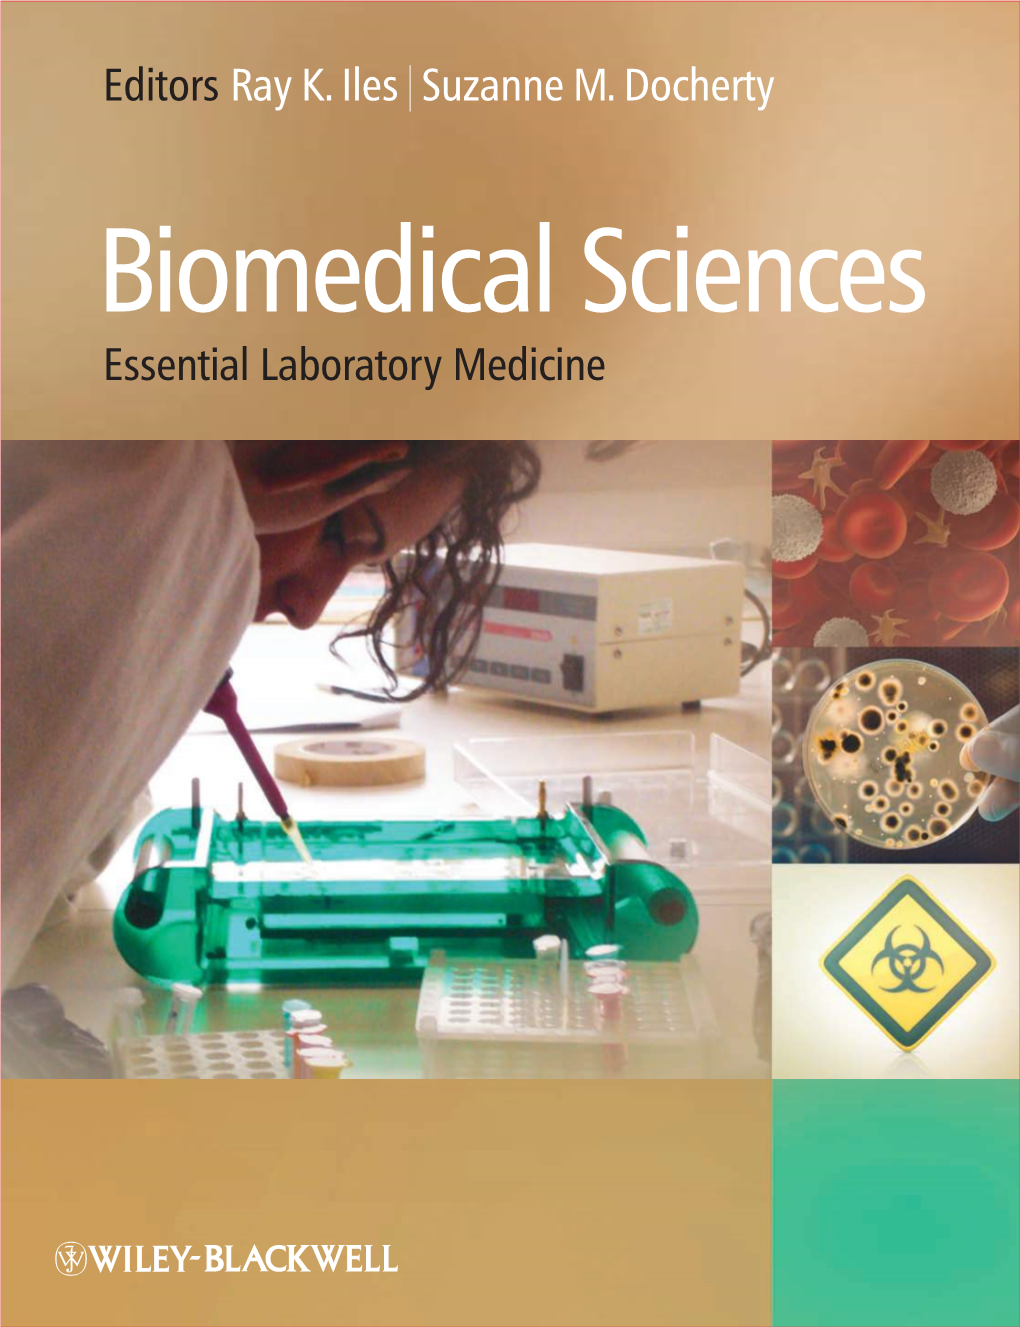 Biomedical Sciences : Essential Laboratory Medicine / Raymond Iles and Suzanne Docherty